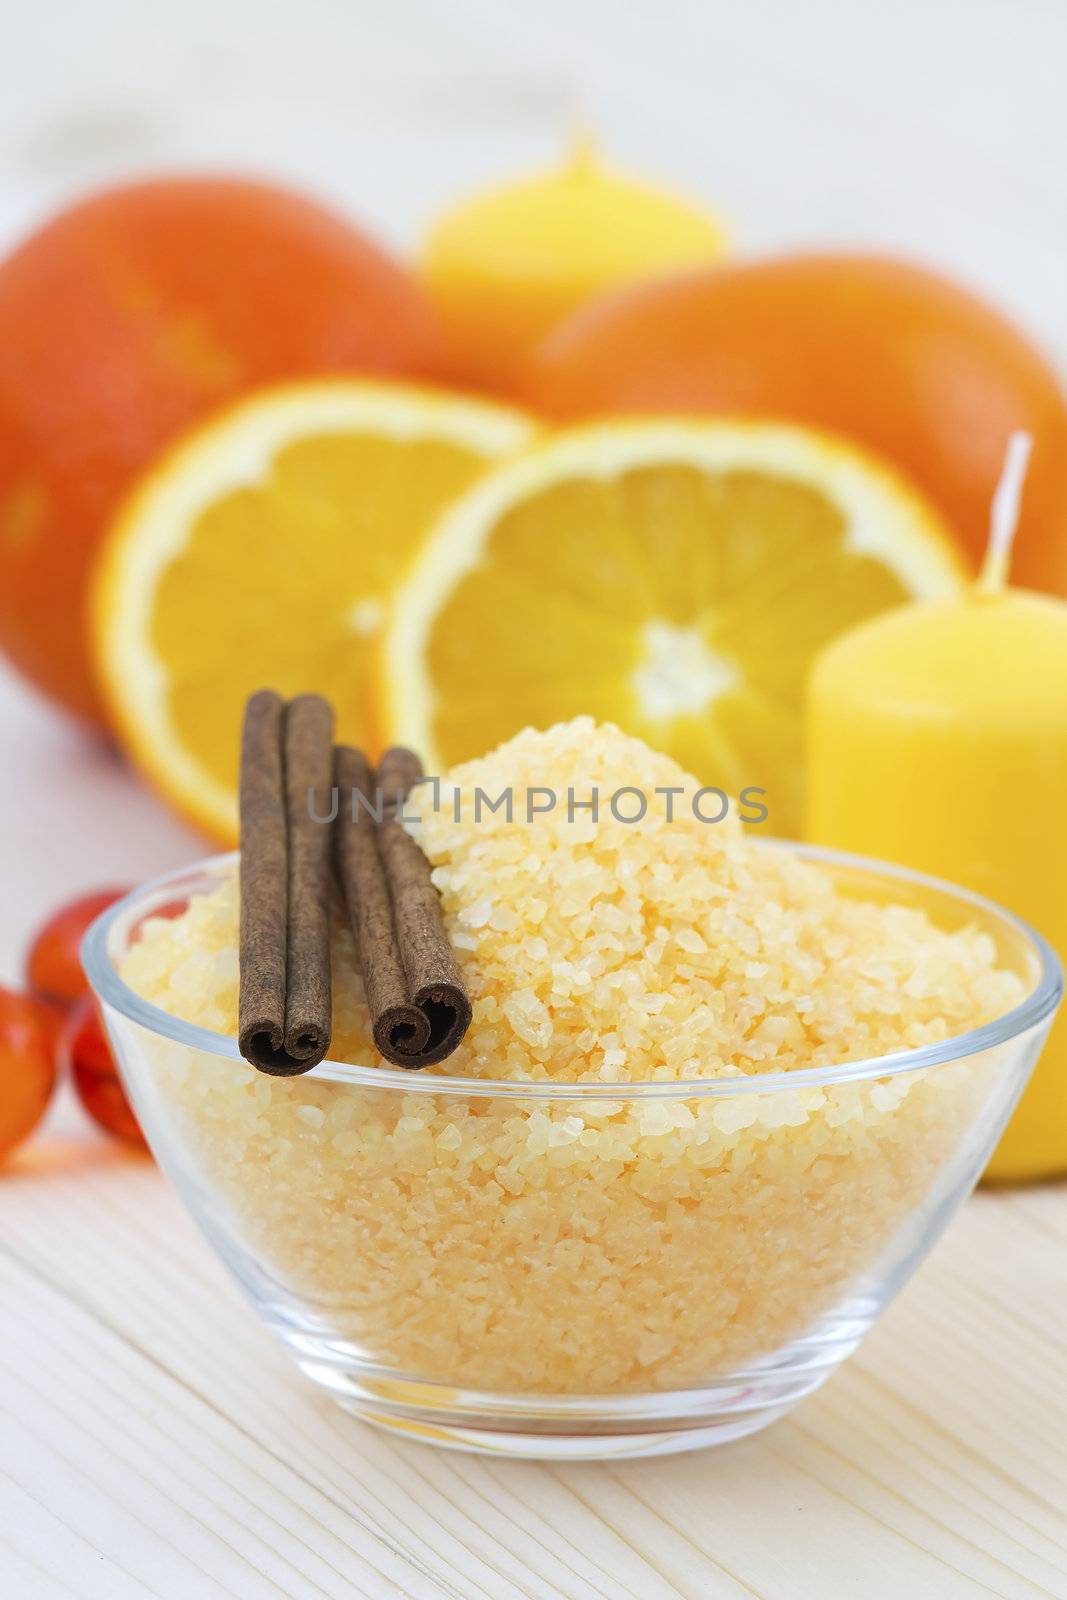 bowl of orange bath salt with fresh fruits - beauty treatment by miradrozdowski